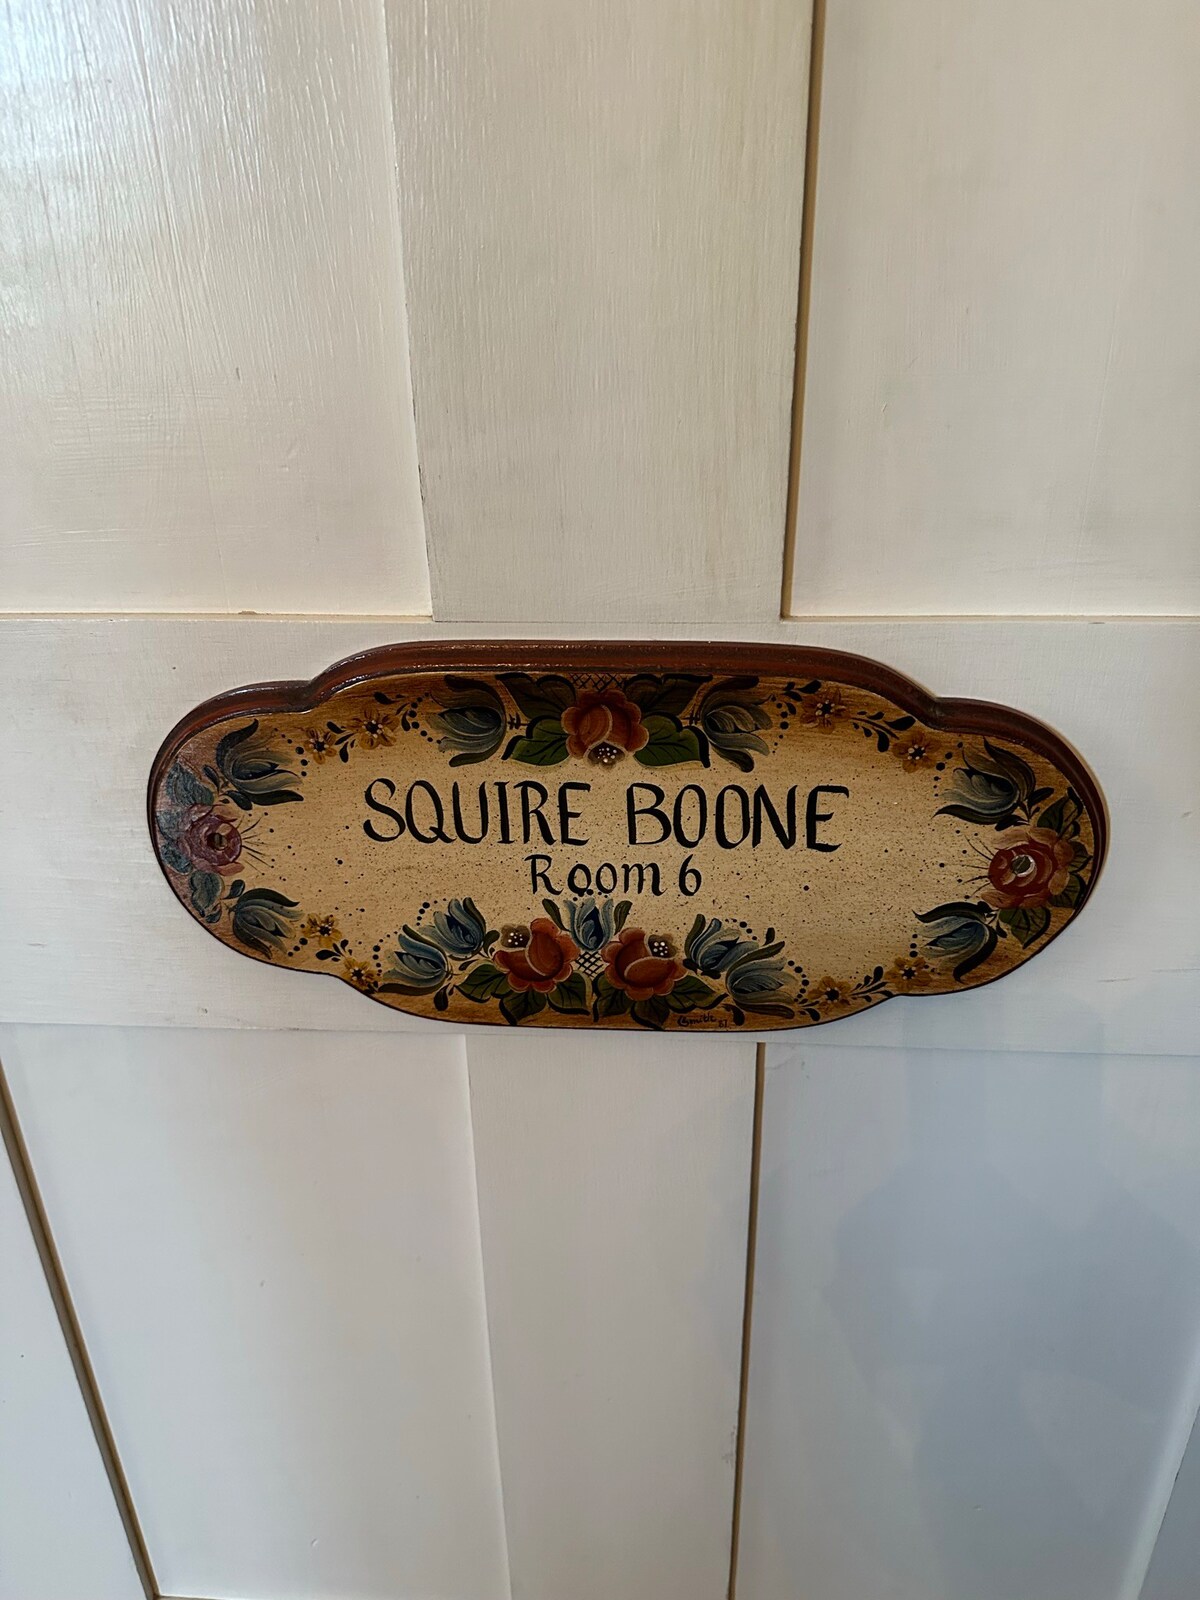 Kintner House Inn -房间6 ， Squire Boone客房